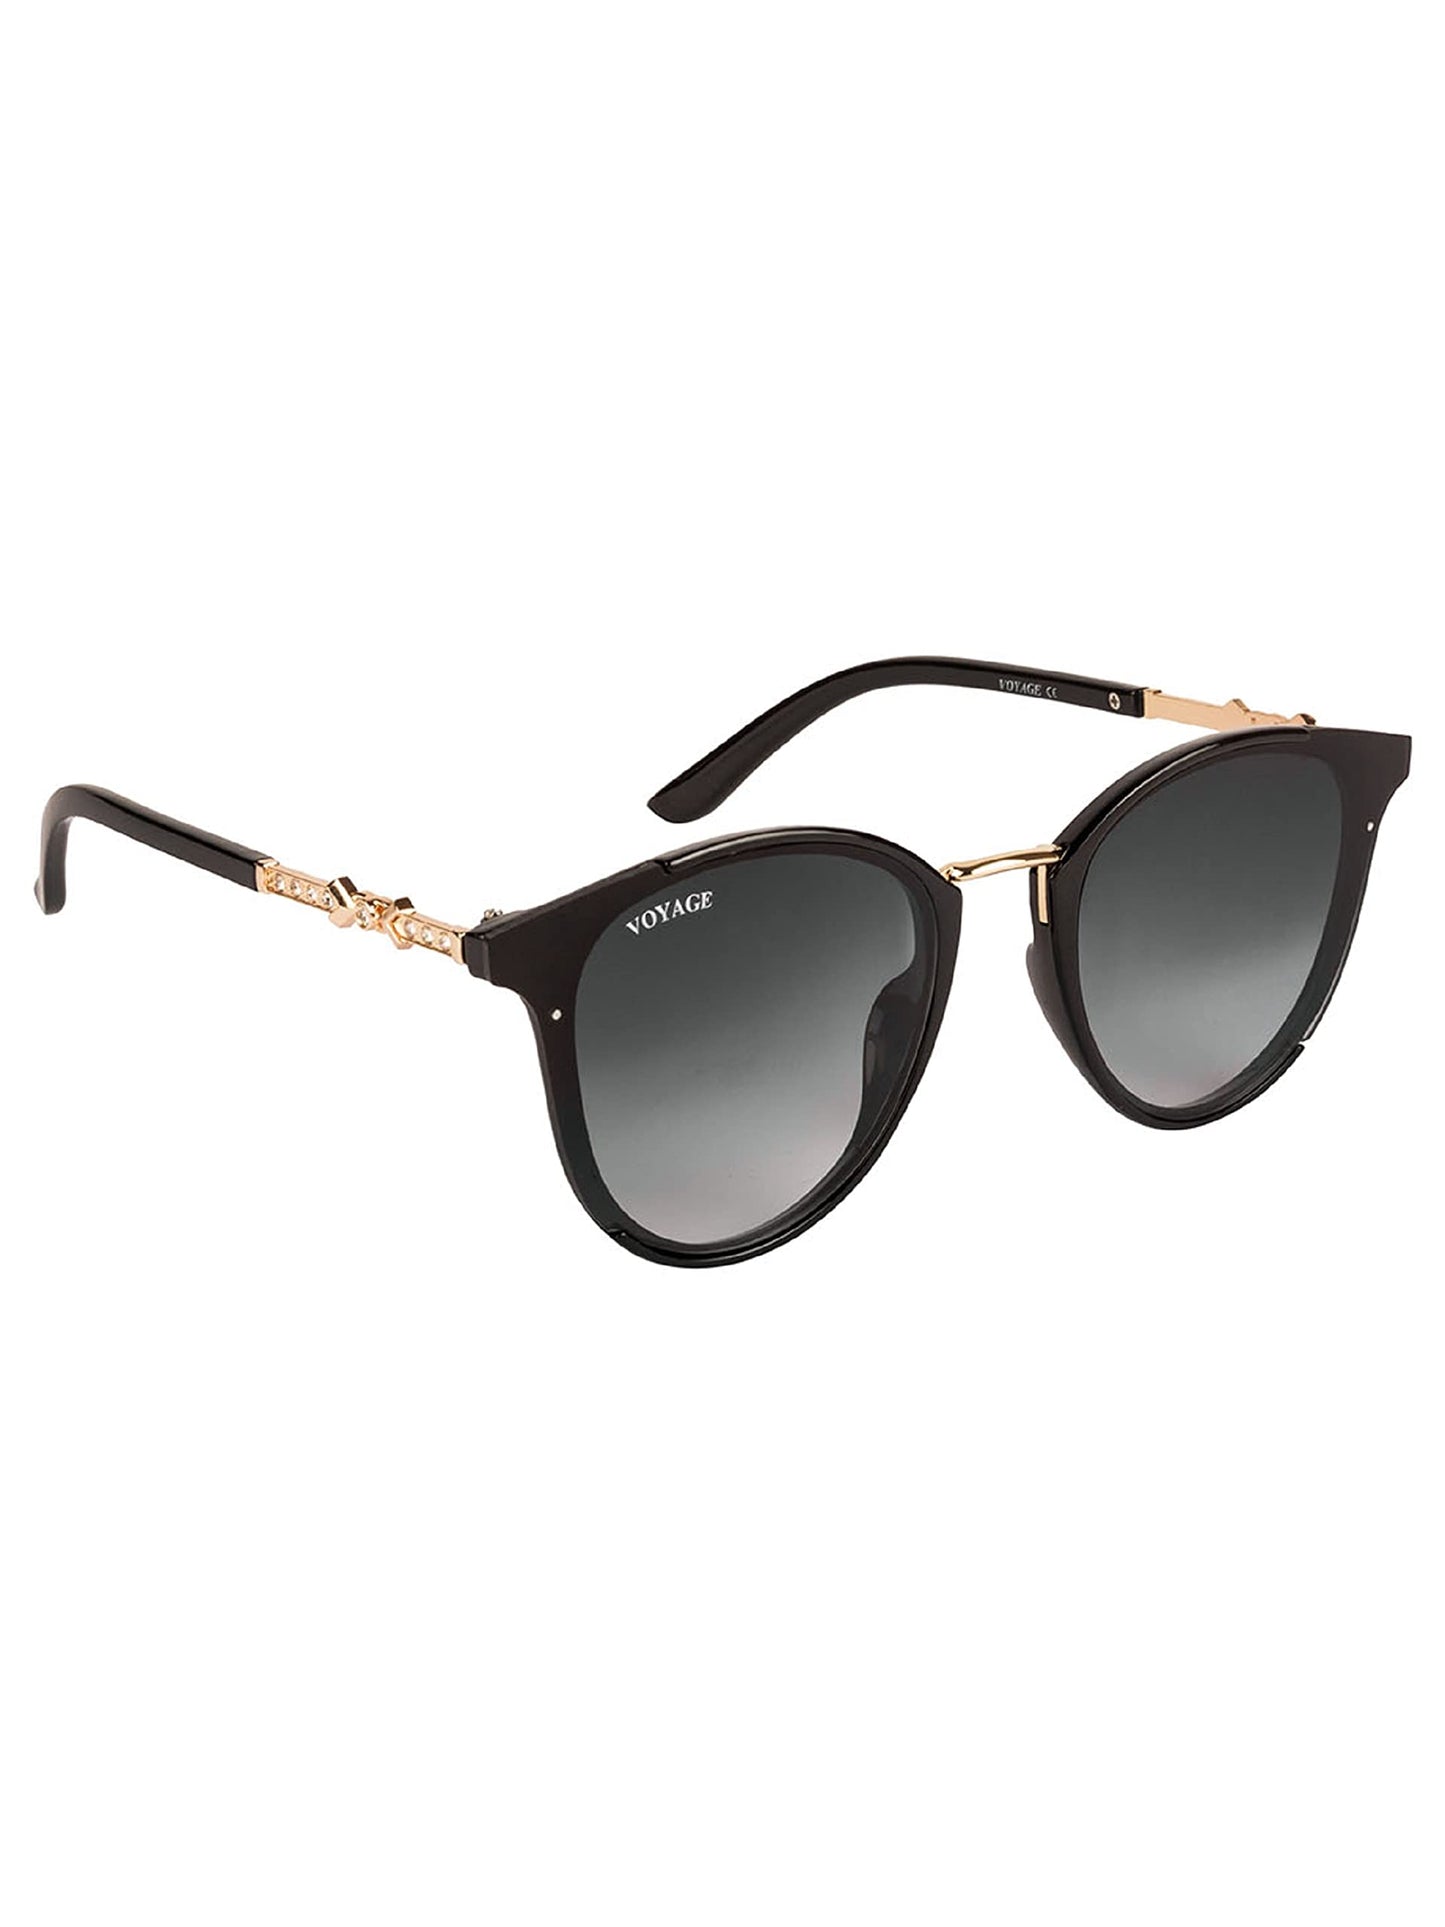 Voyage UV Protected Oval Women Sunglasses - (B8725MG3187Z | Black Lens | Black Frame)